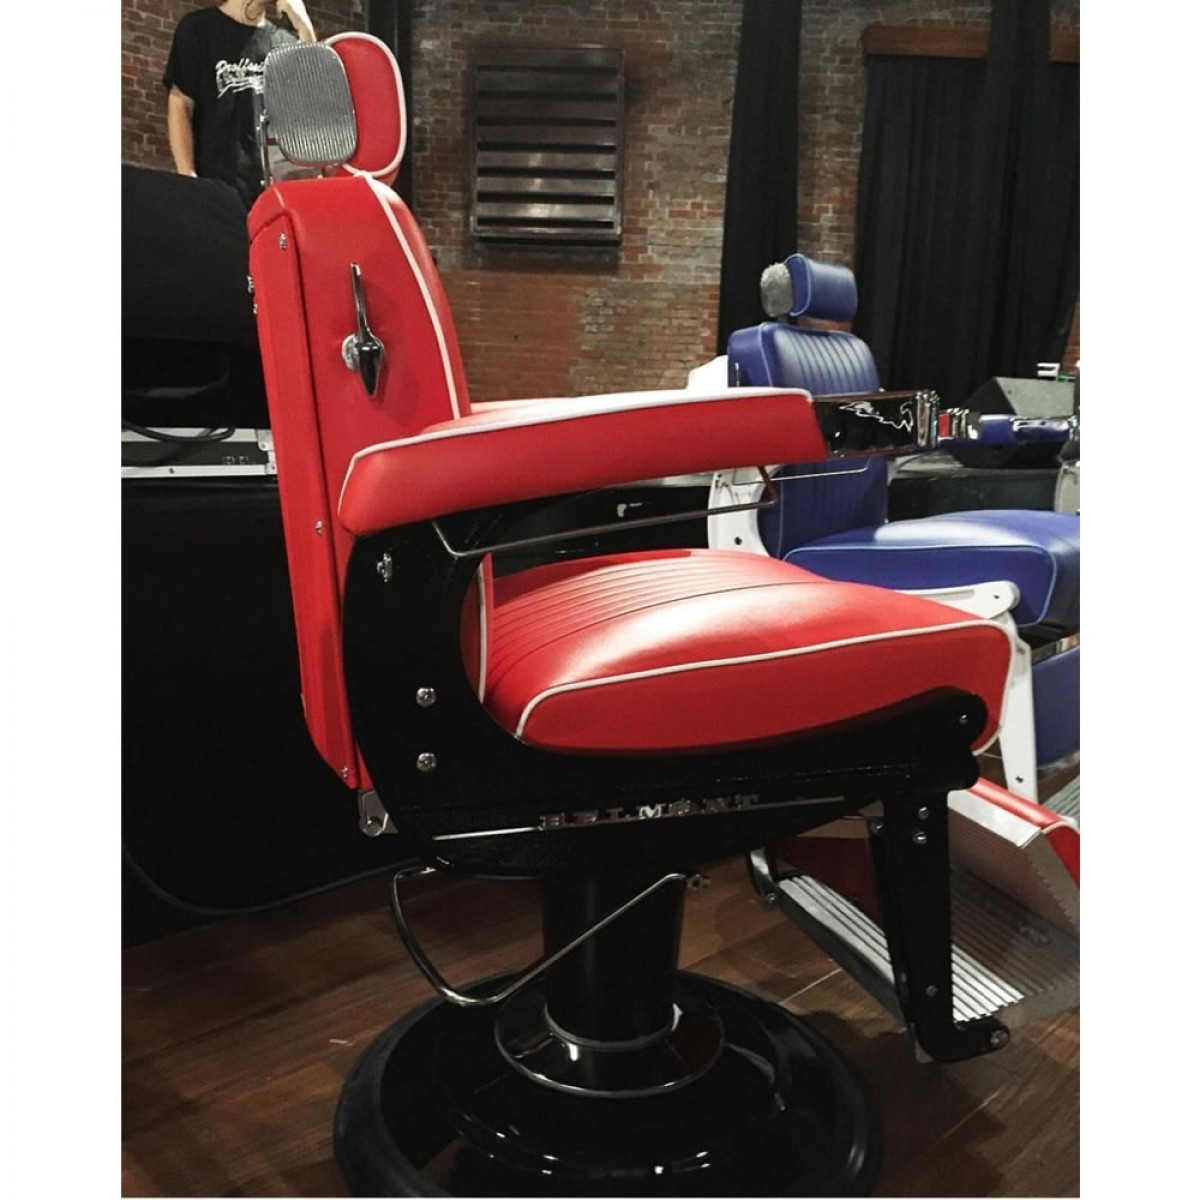 TAKARA BELMONT B225 "ELITE BLACK" Barber Chair TAKARA